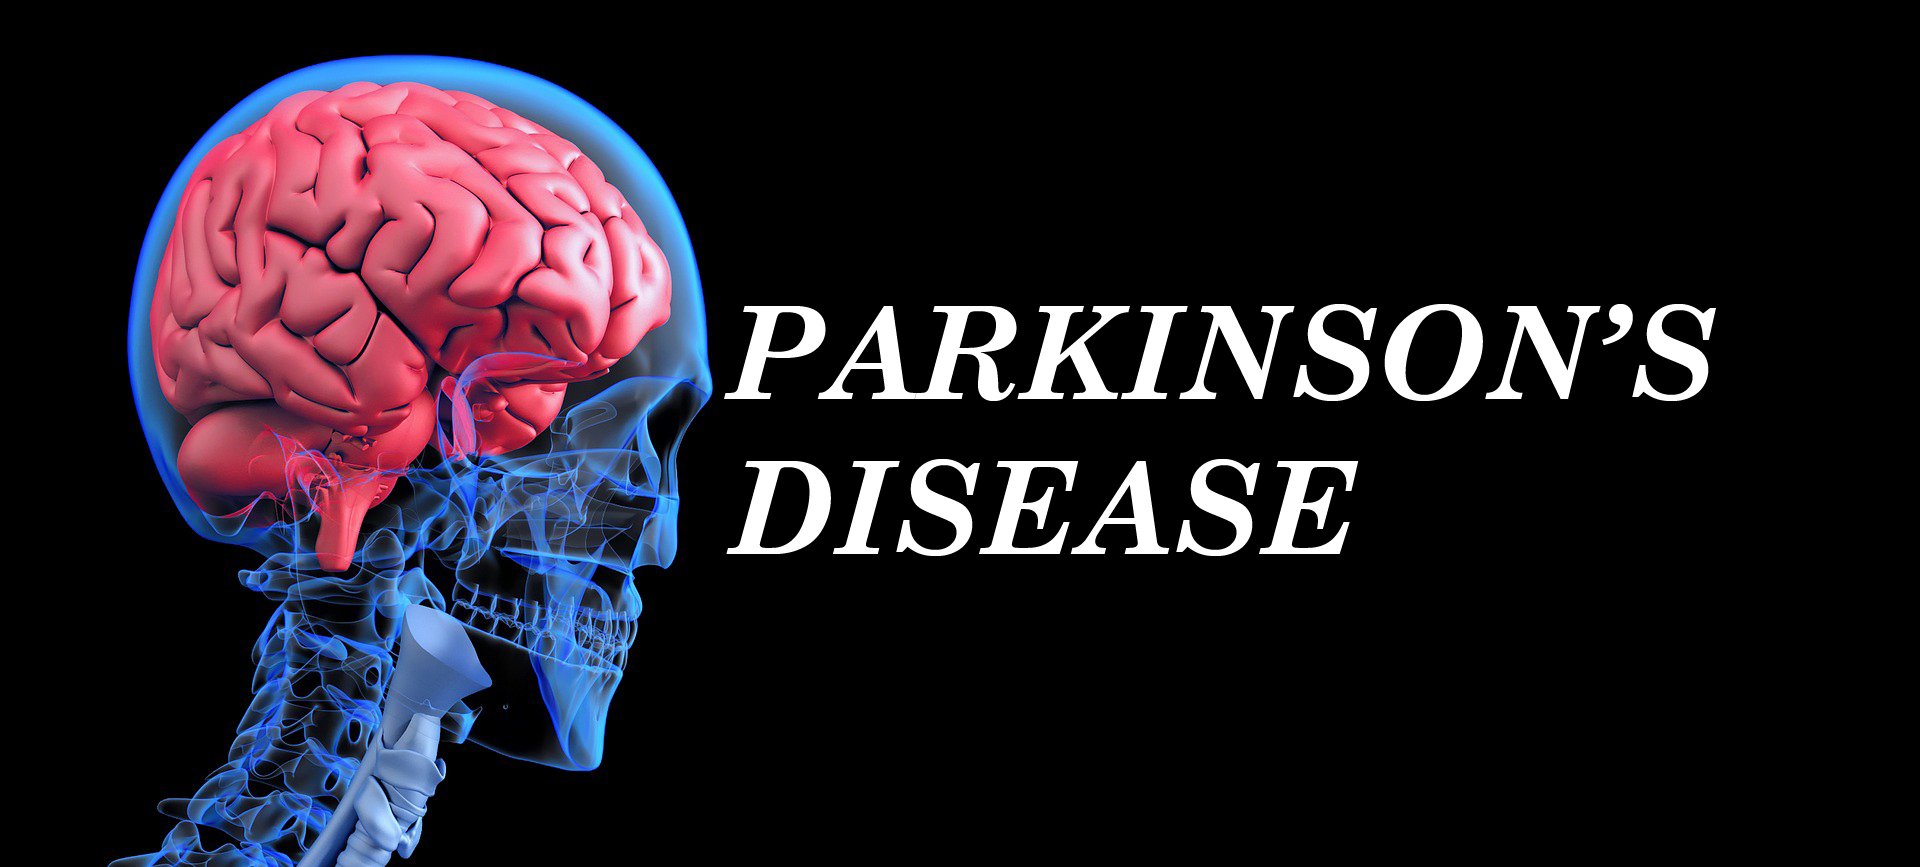 Living with Parkinsonâs Disease